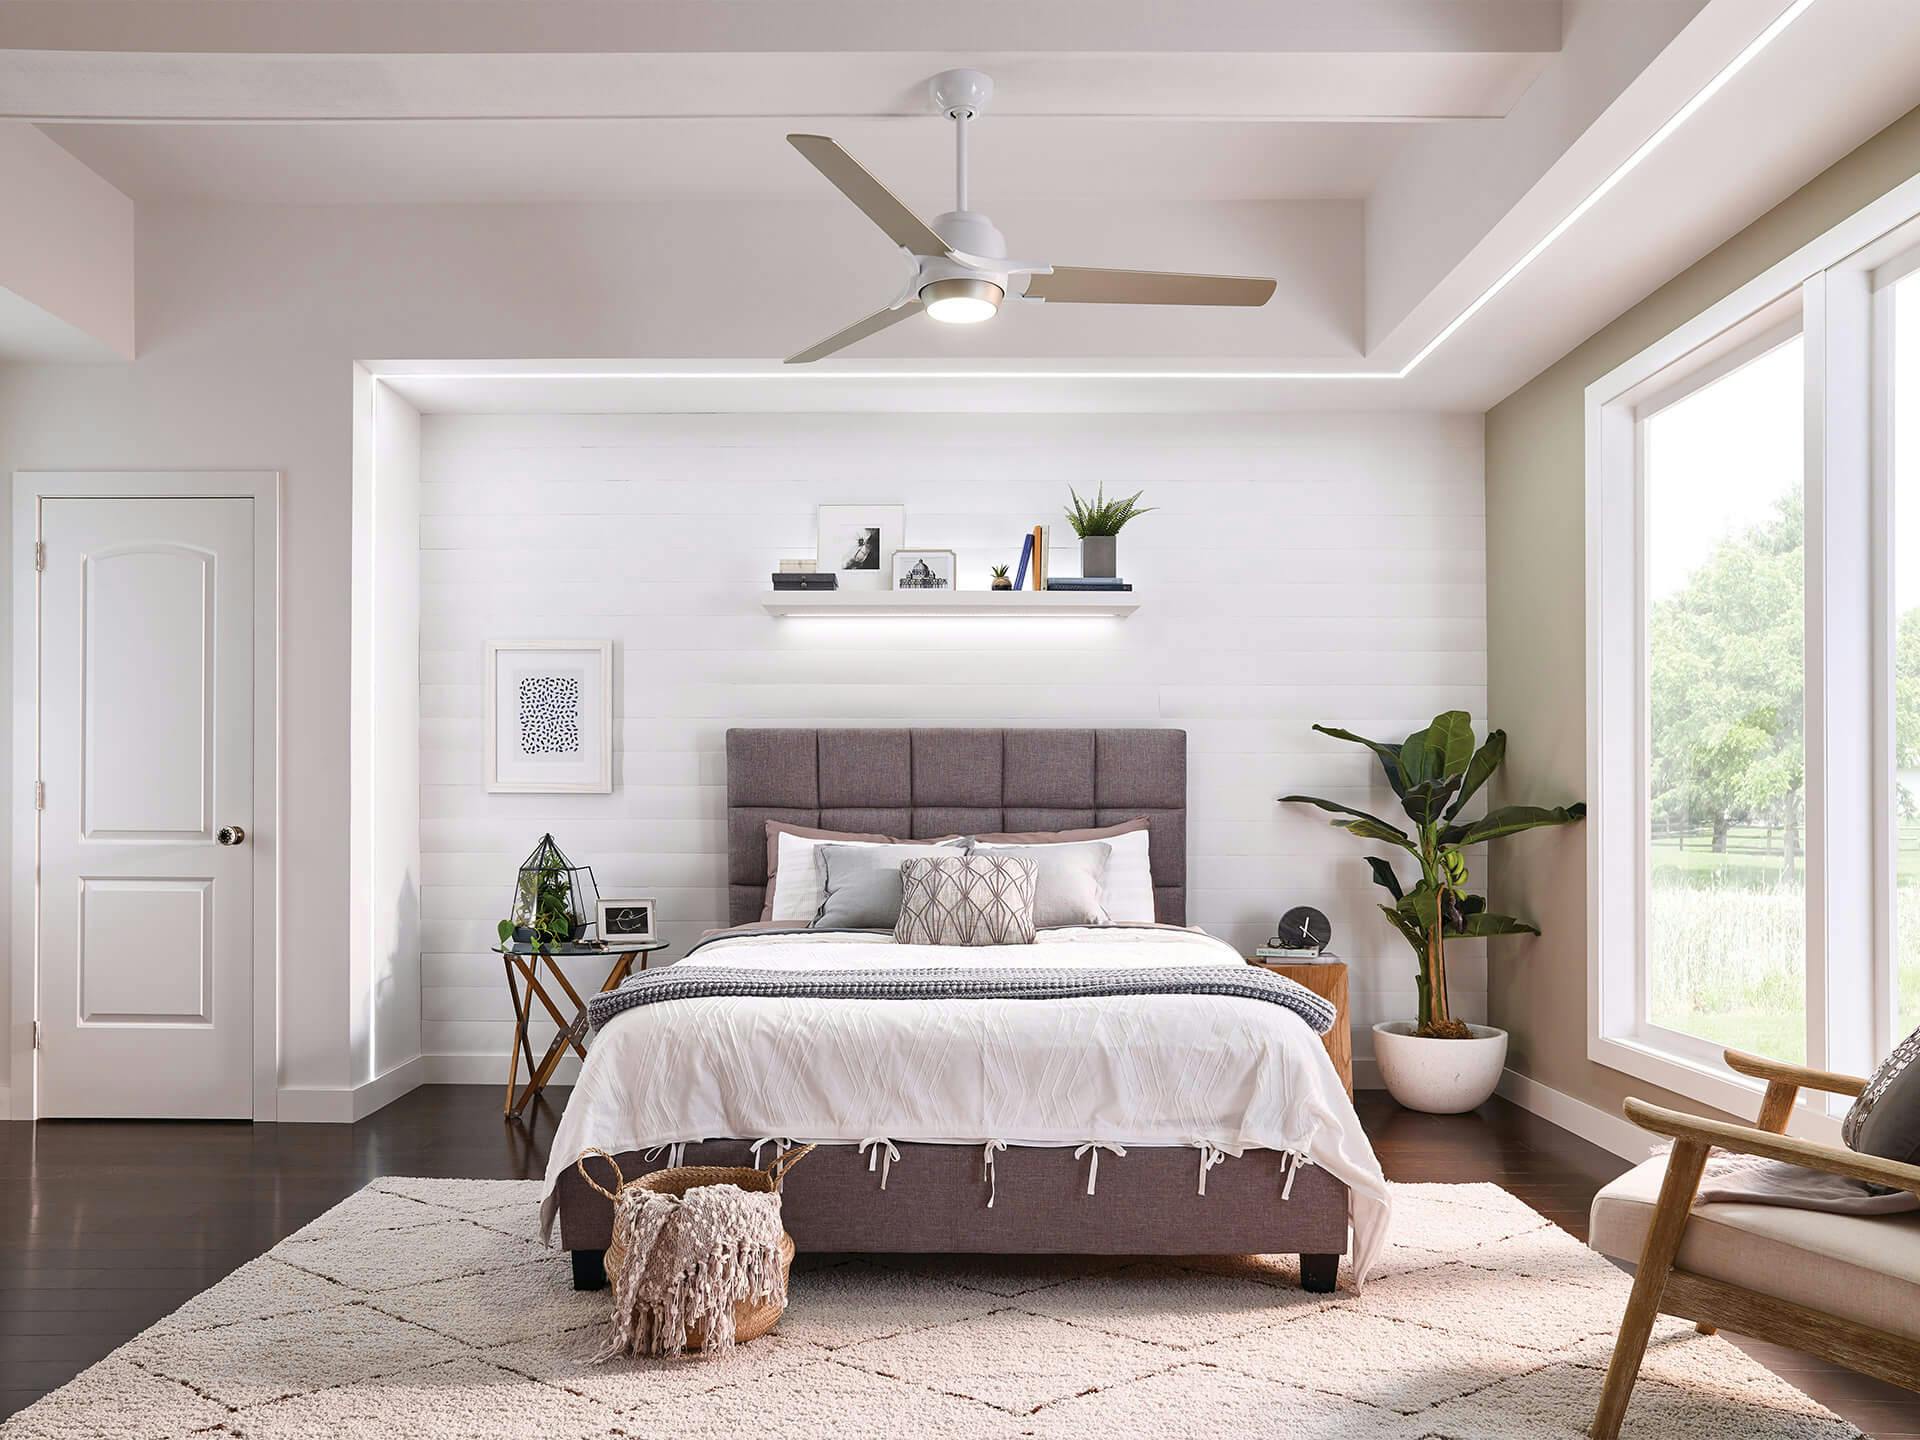 Bedroom featuring a Zeus ceiling fan